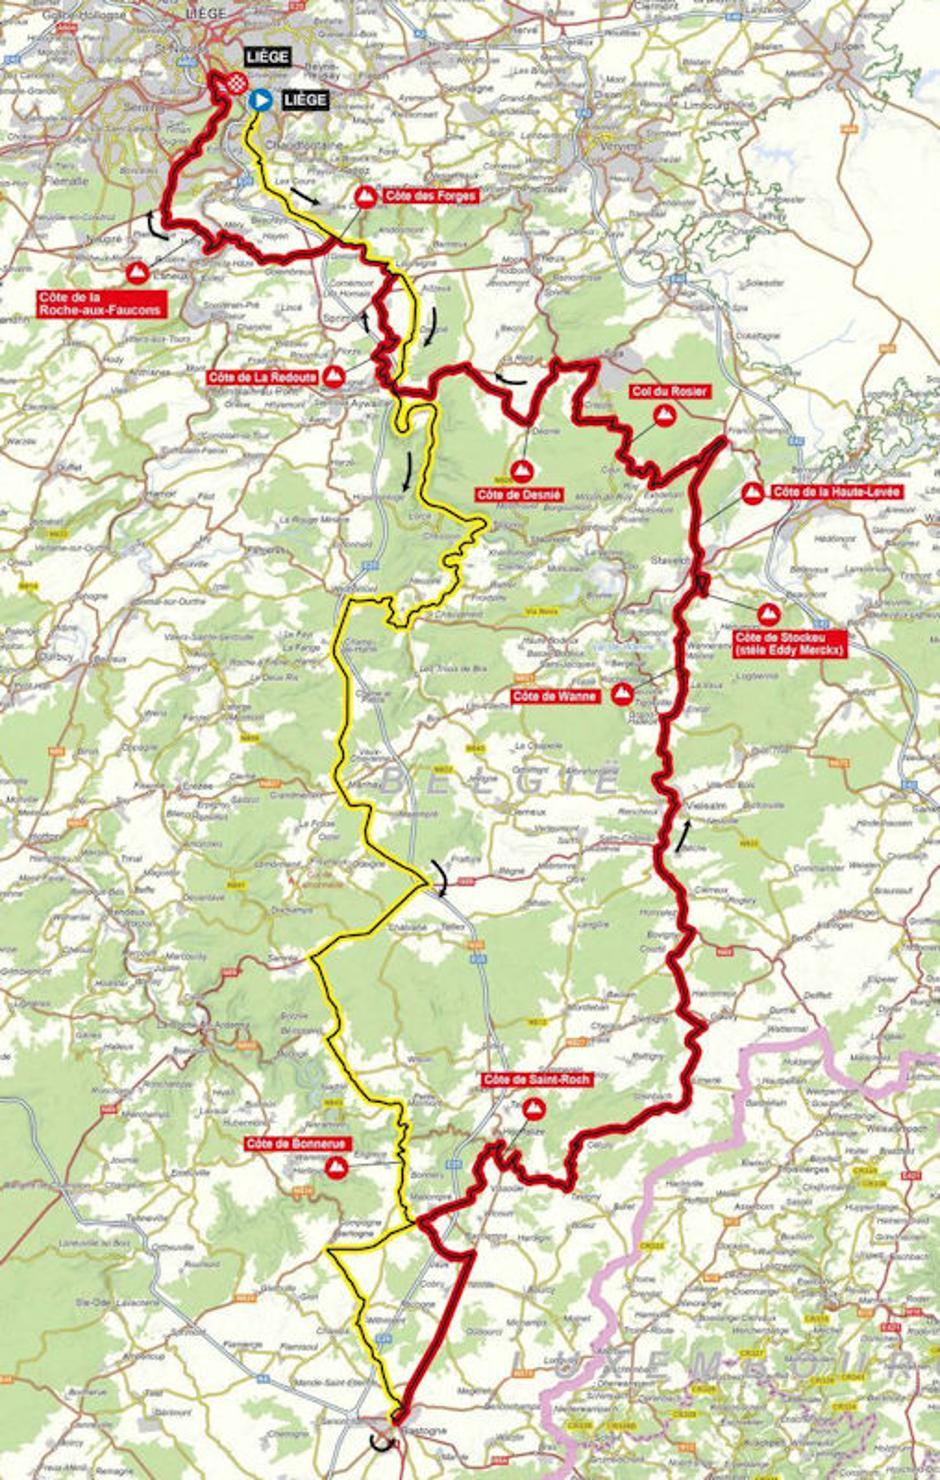 Liege-Bastogne-Liege | Avtor: Cyclingstage